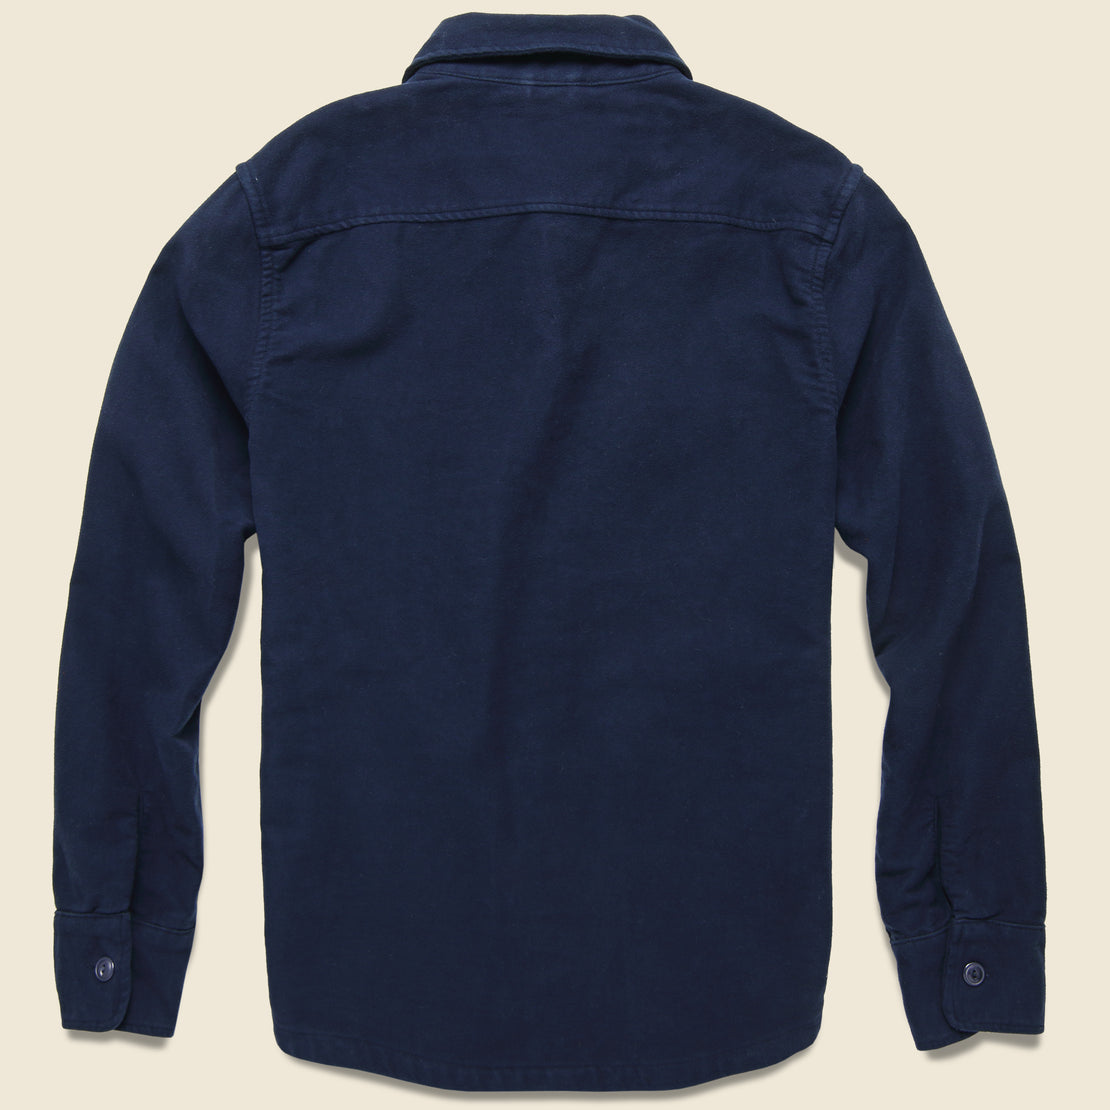 Moleskin CPO Jacket - Navy - Save Khaki - STAG Provisions - Outerwear - Shirt Jacket